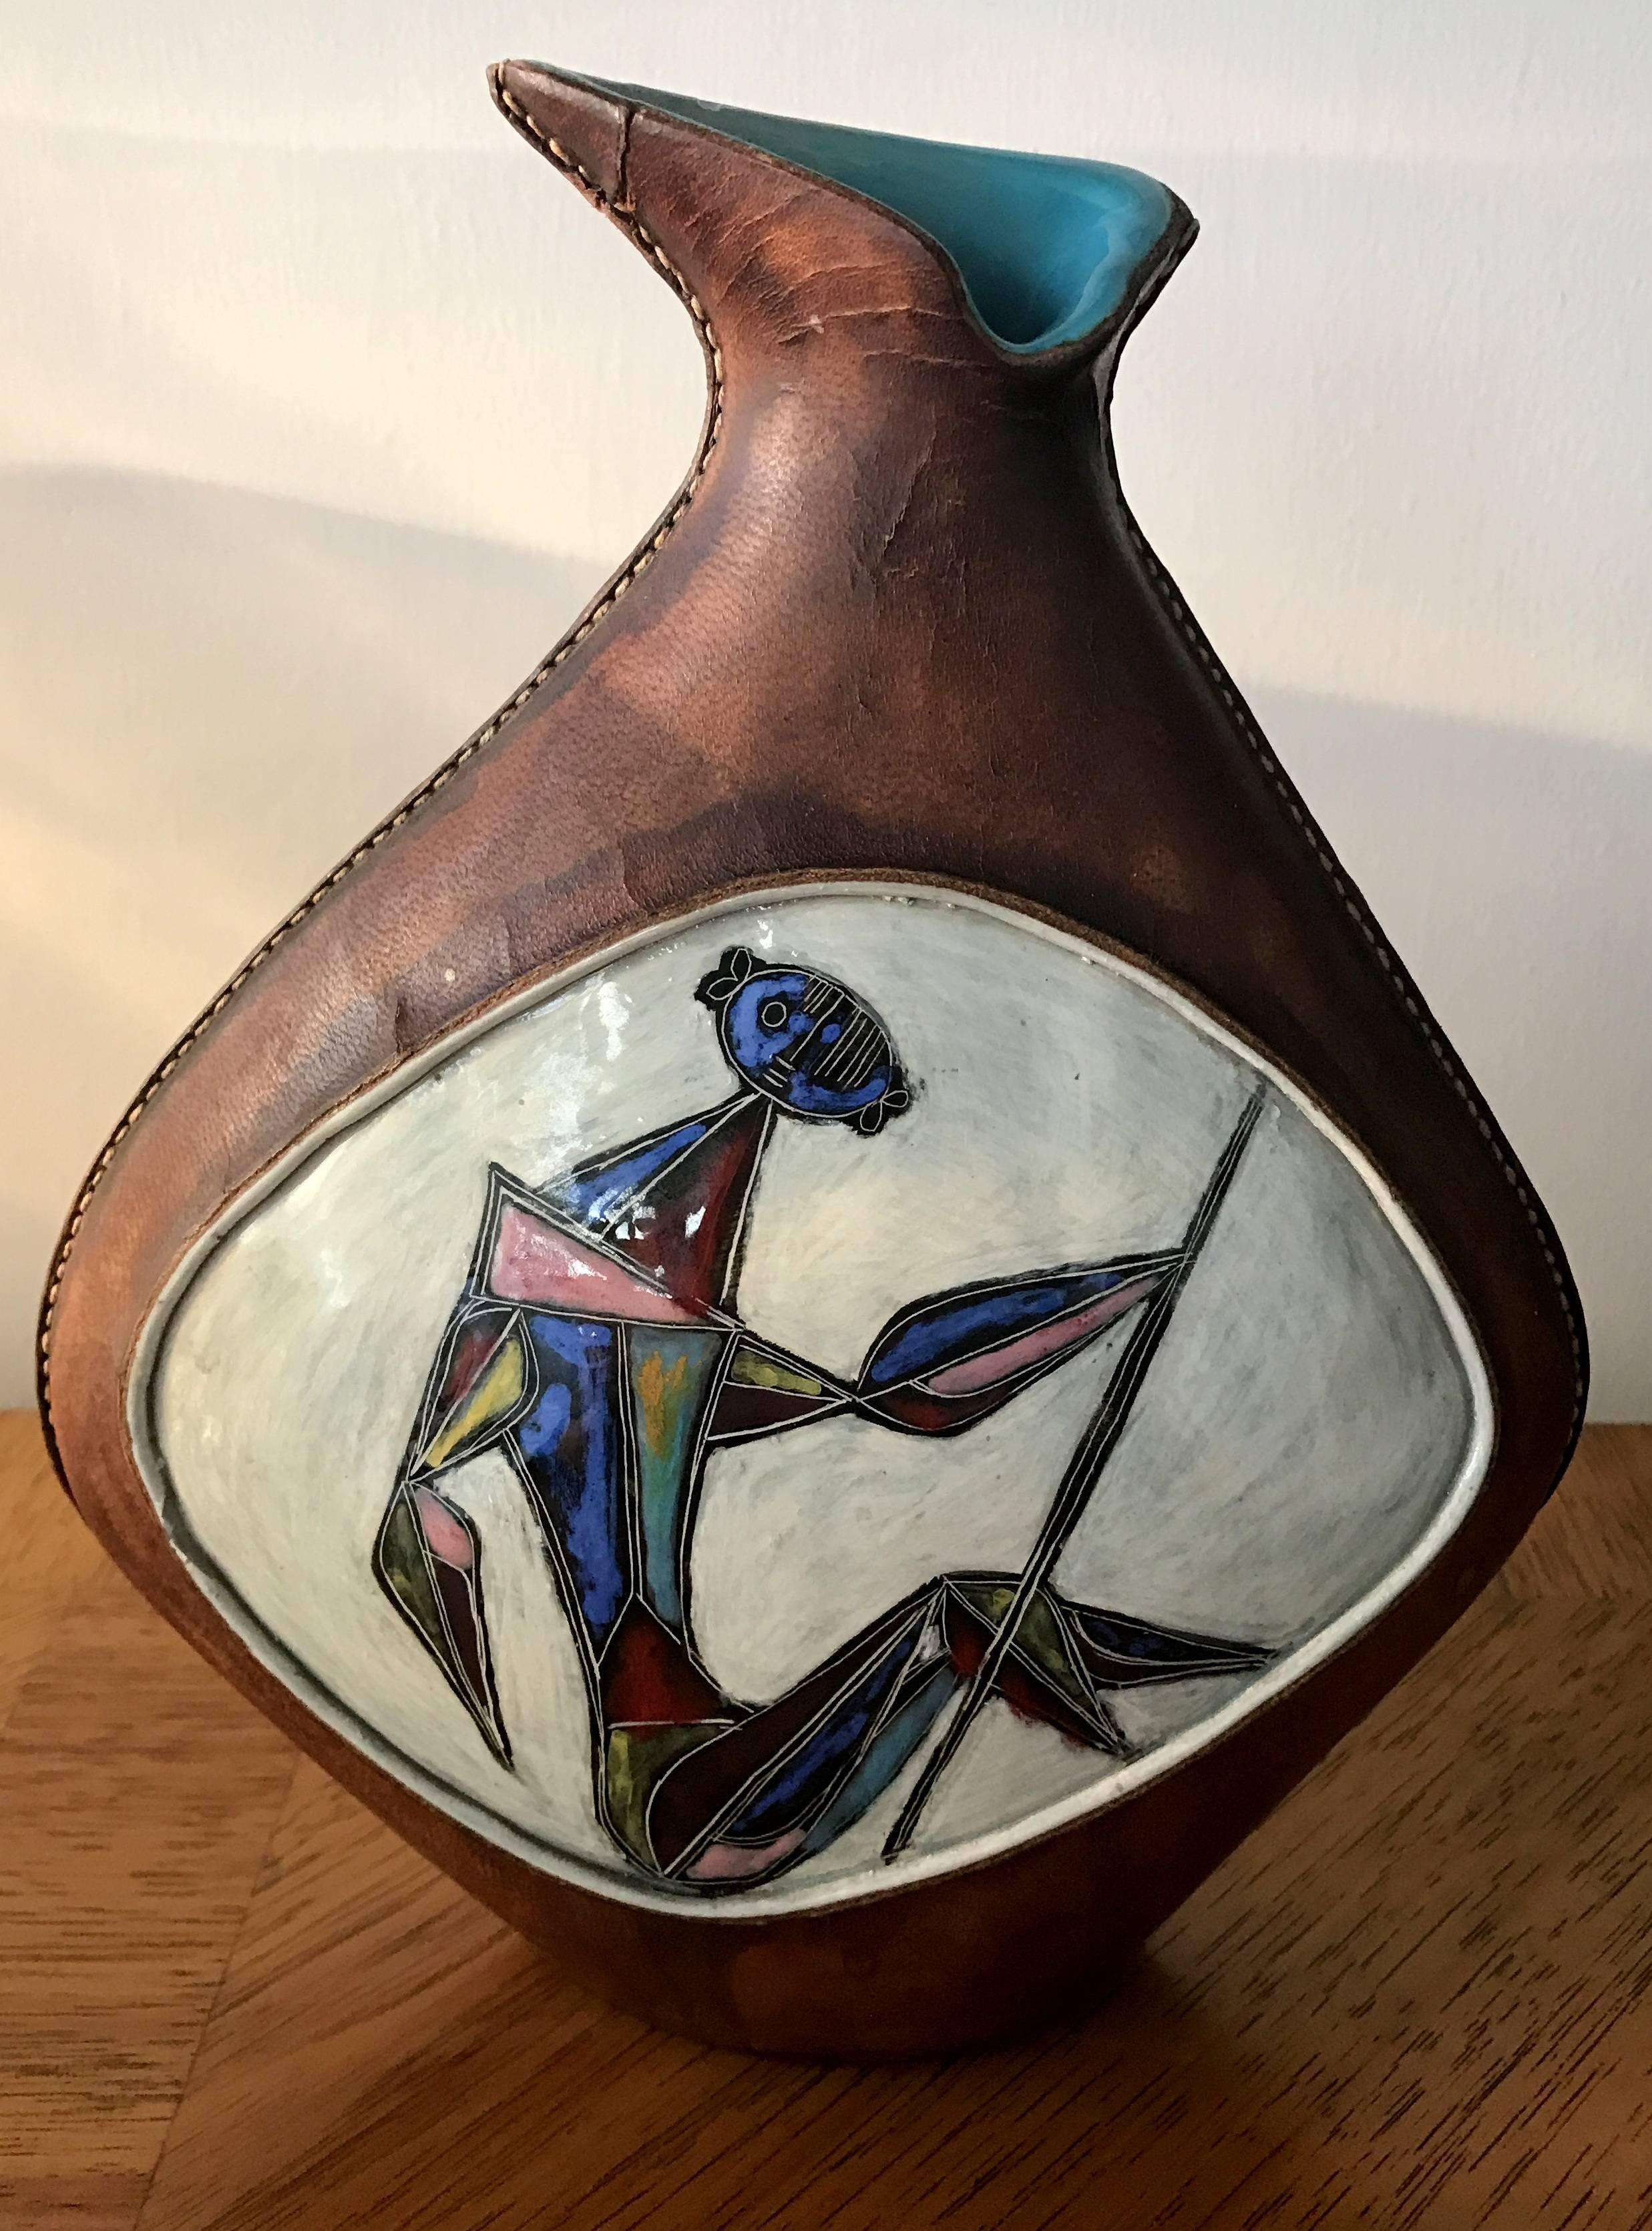 Signed Marcello Fantoni Italian glazed ceramic vase encased in Leather with Cubist warrior figure.